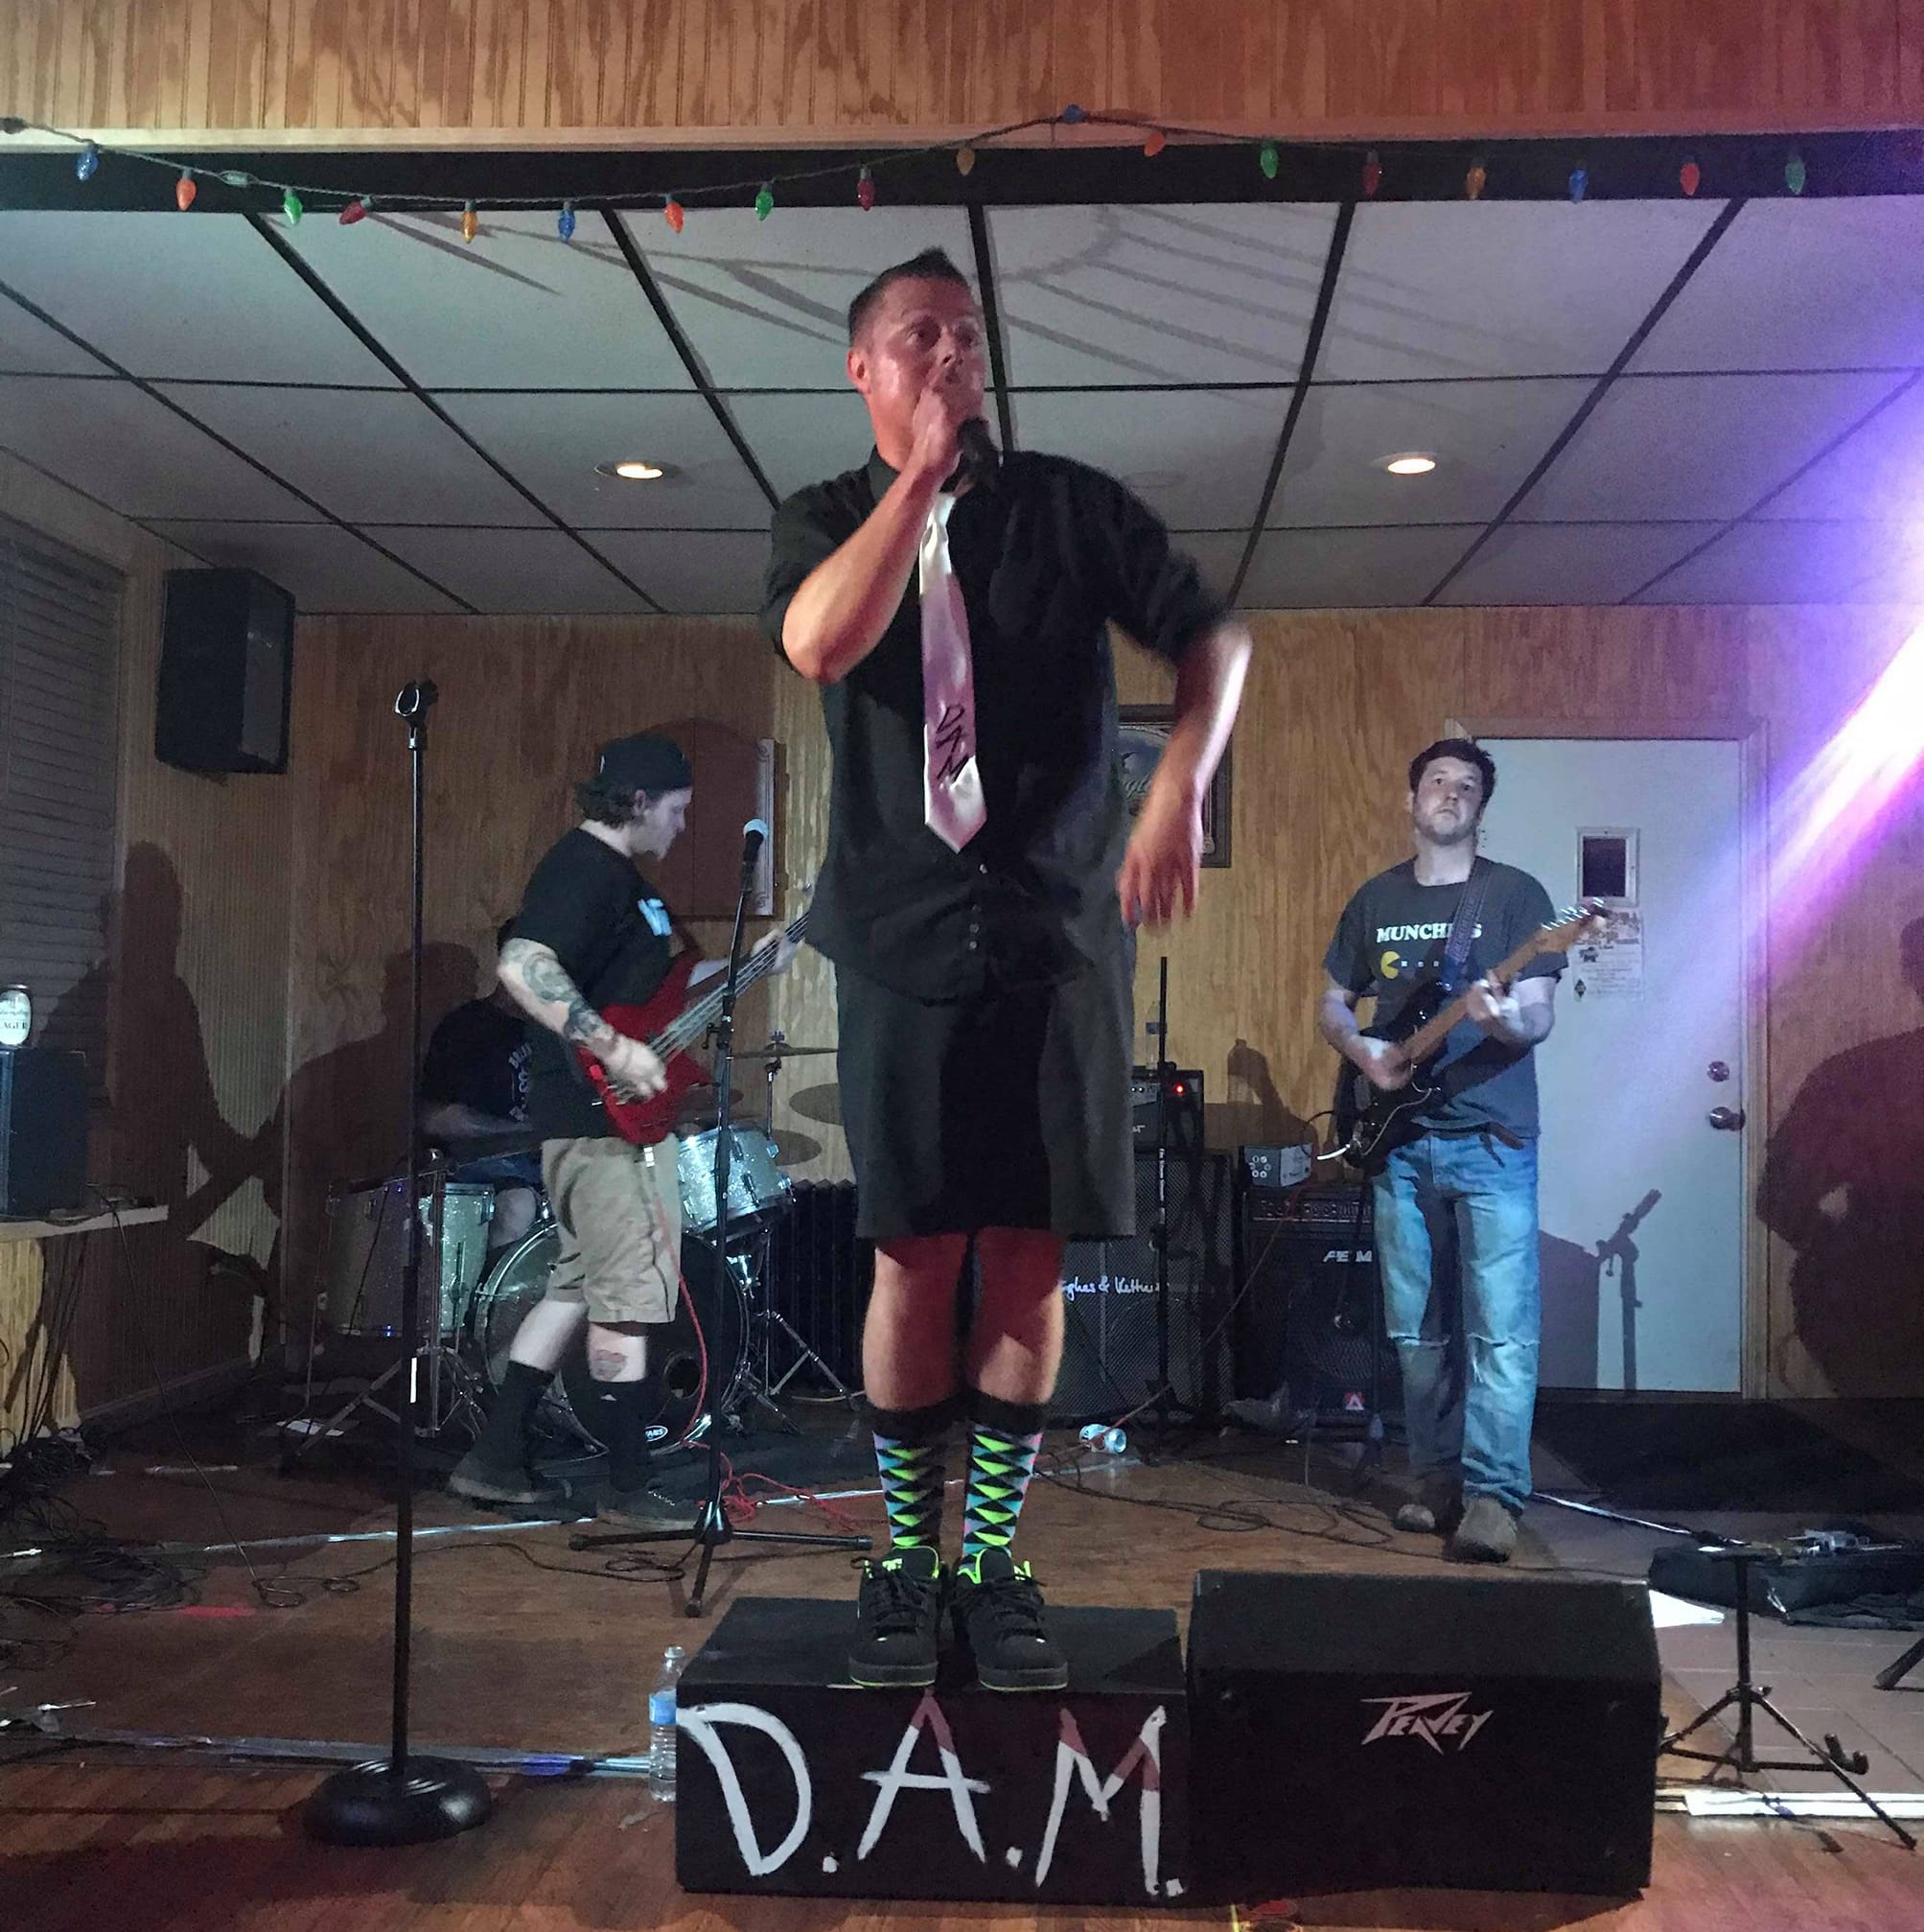 That DAM Band